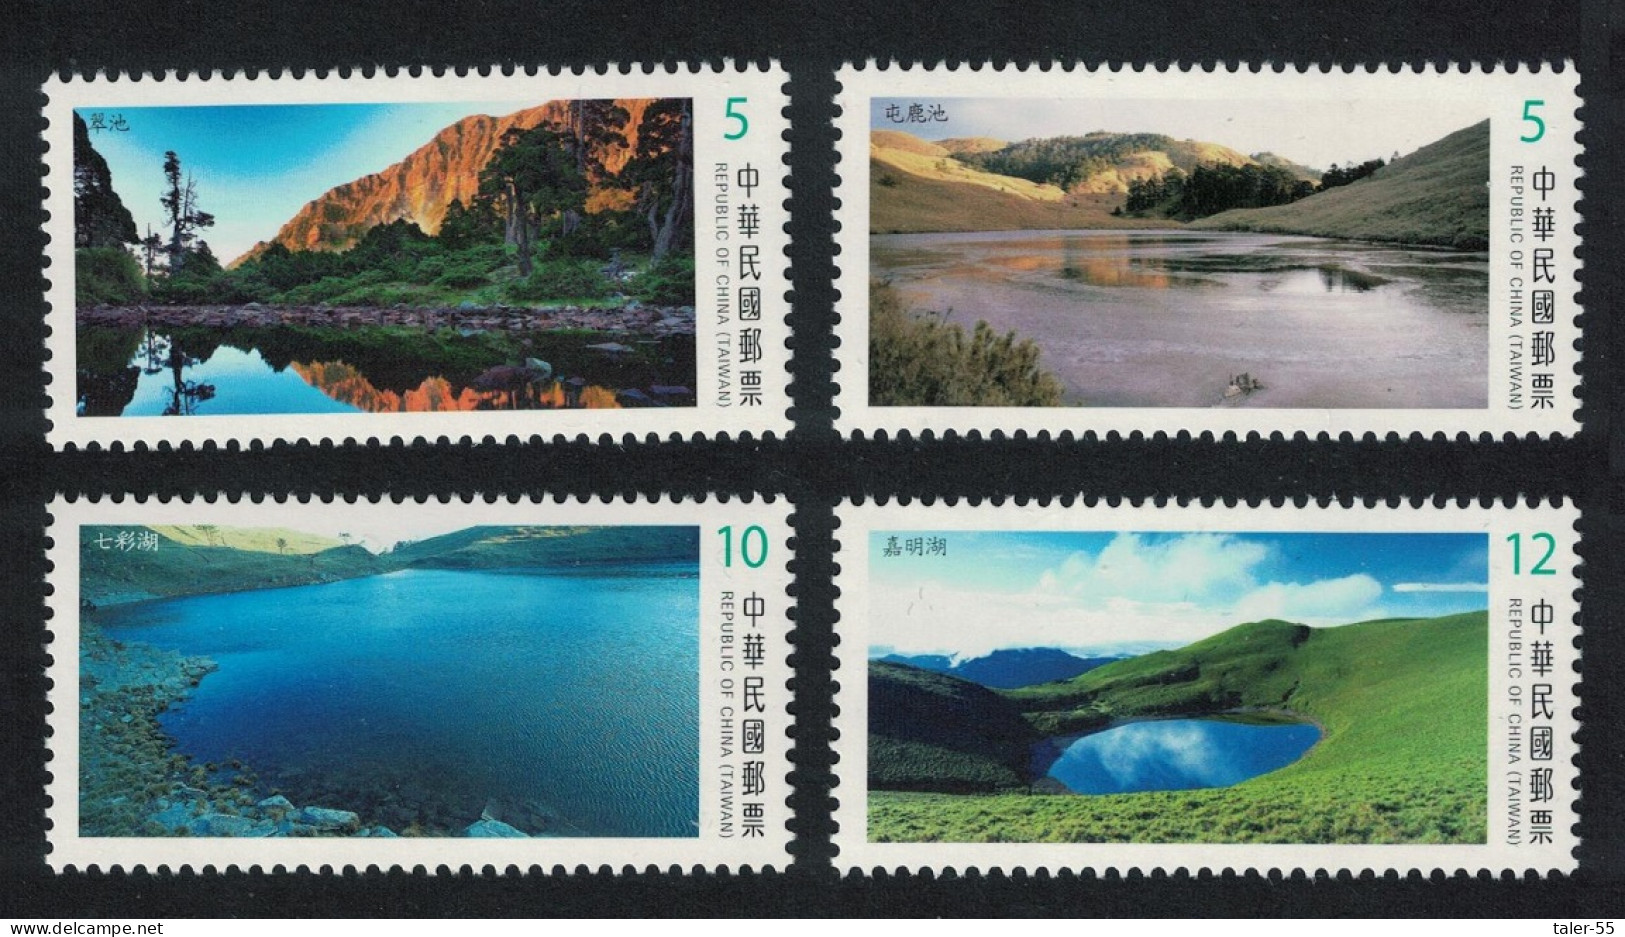 Taiwan Alpine Lakes 4v 2014 MNH SG#3814-3817 - Unused Stamps